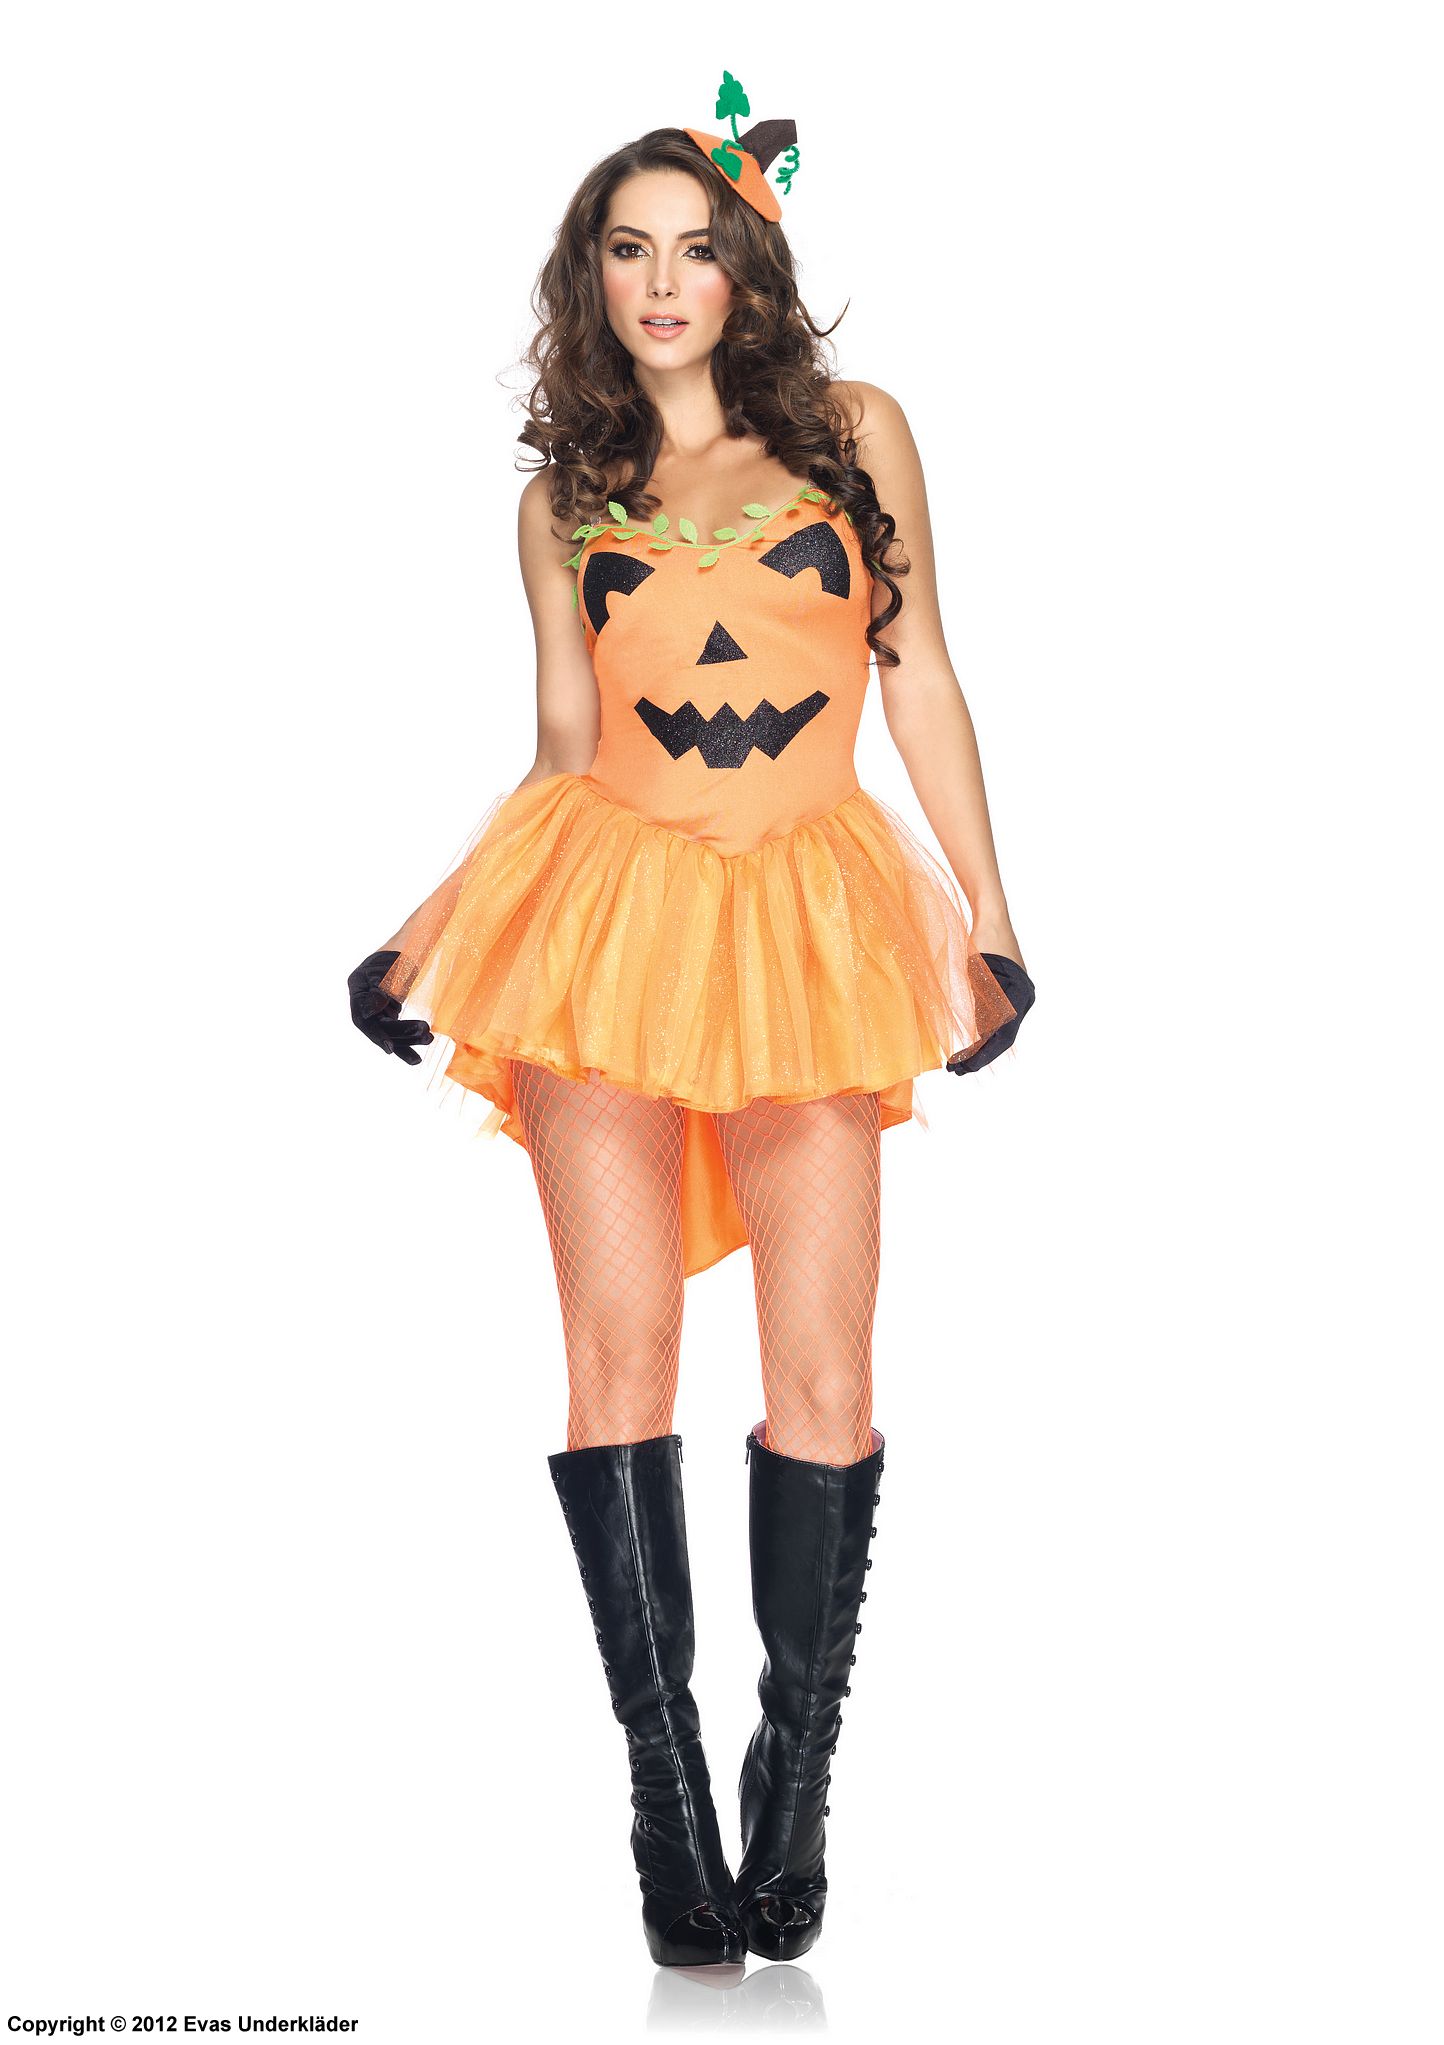 Halloween, costume